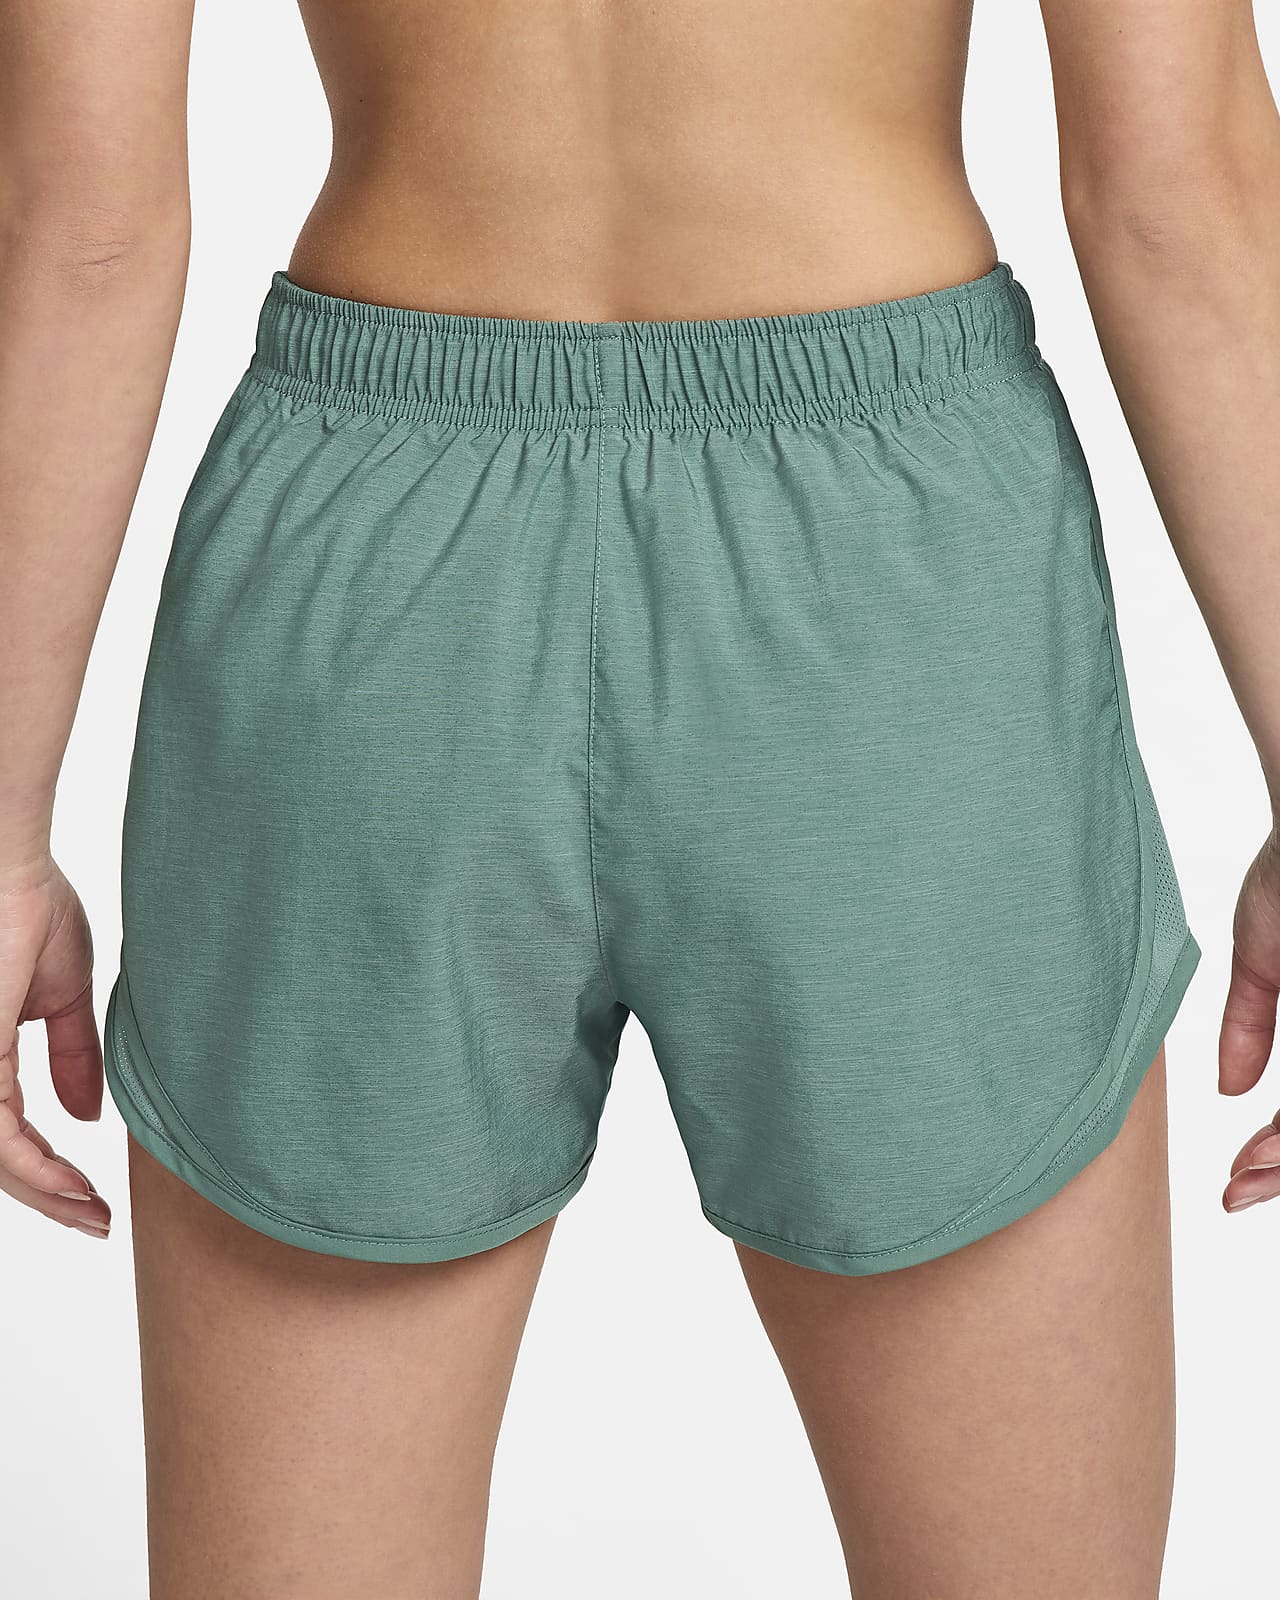 Gray Nike spandex shorts - Short Shorts & Volleyball - Forum